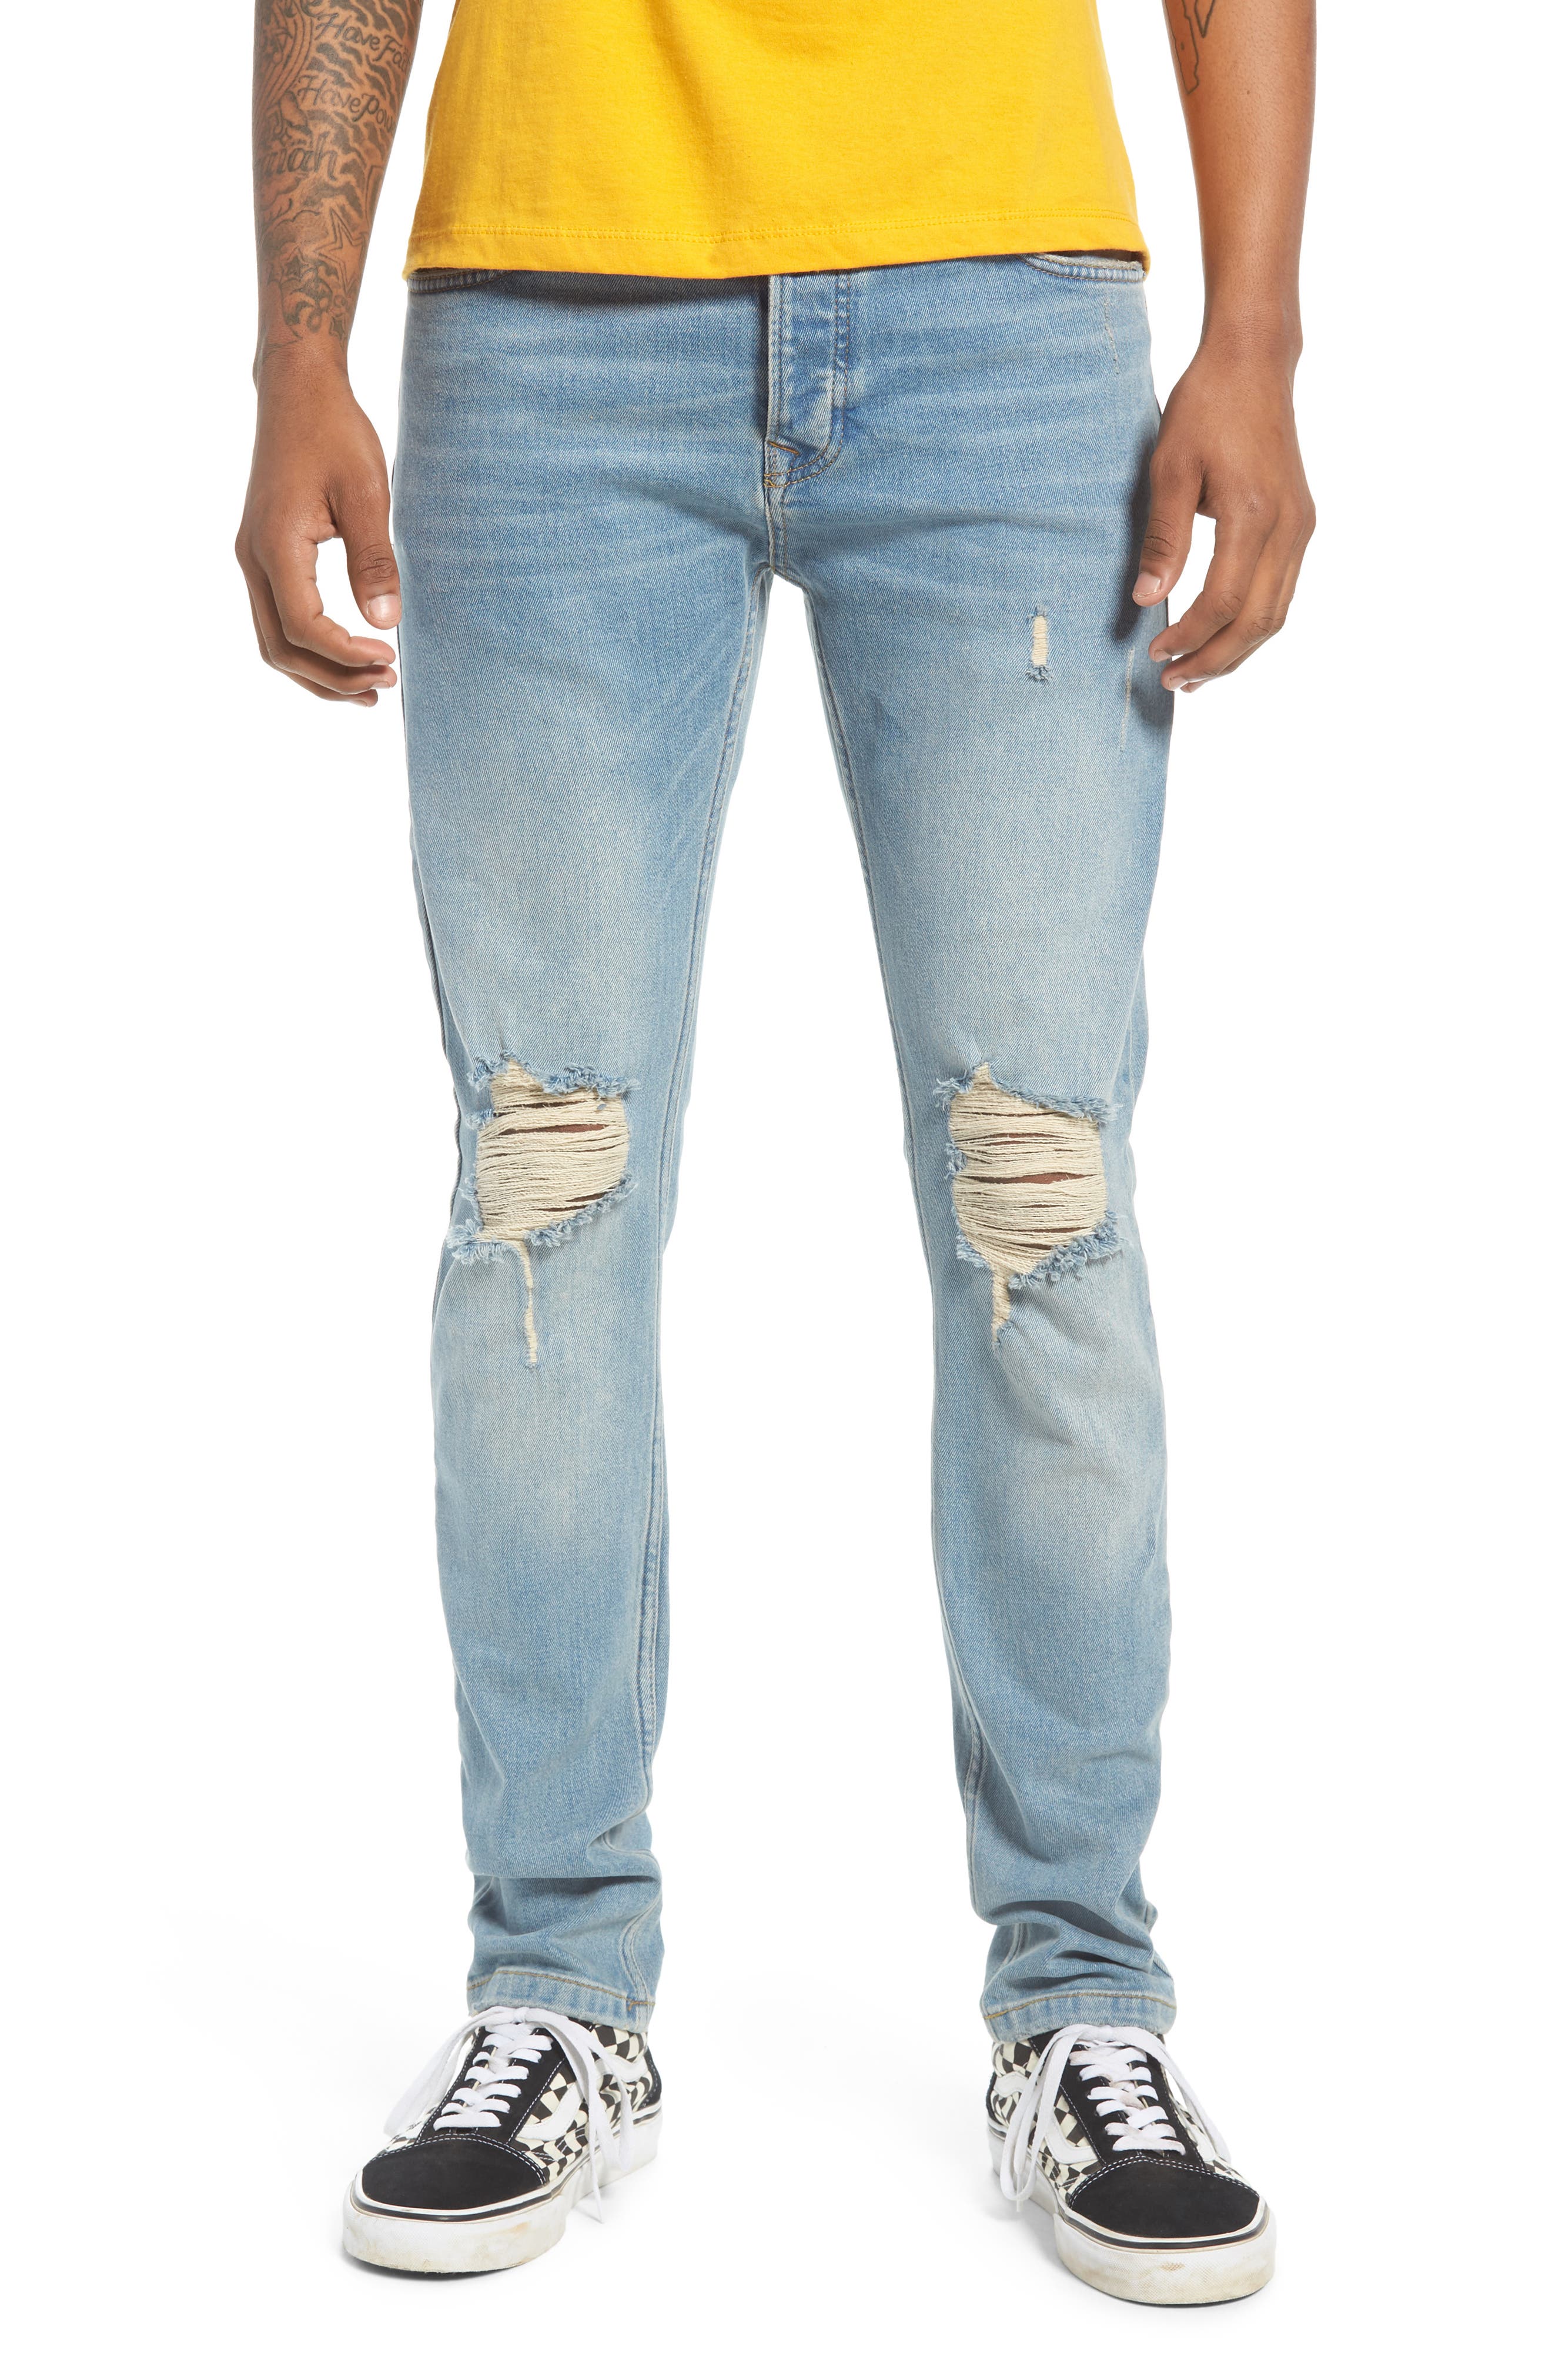 white ripped stretch skinny jeans mens